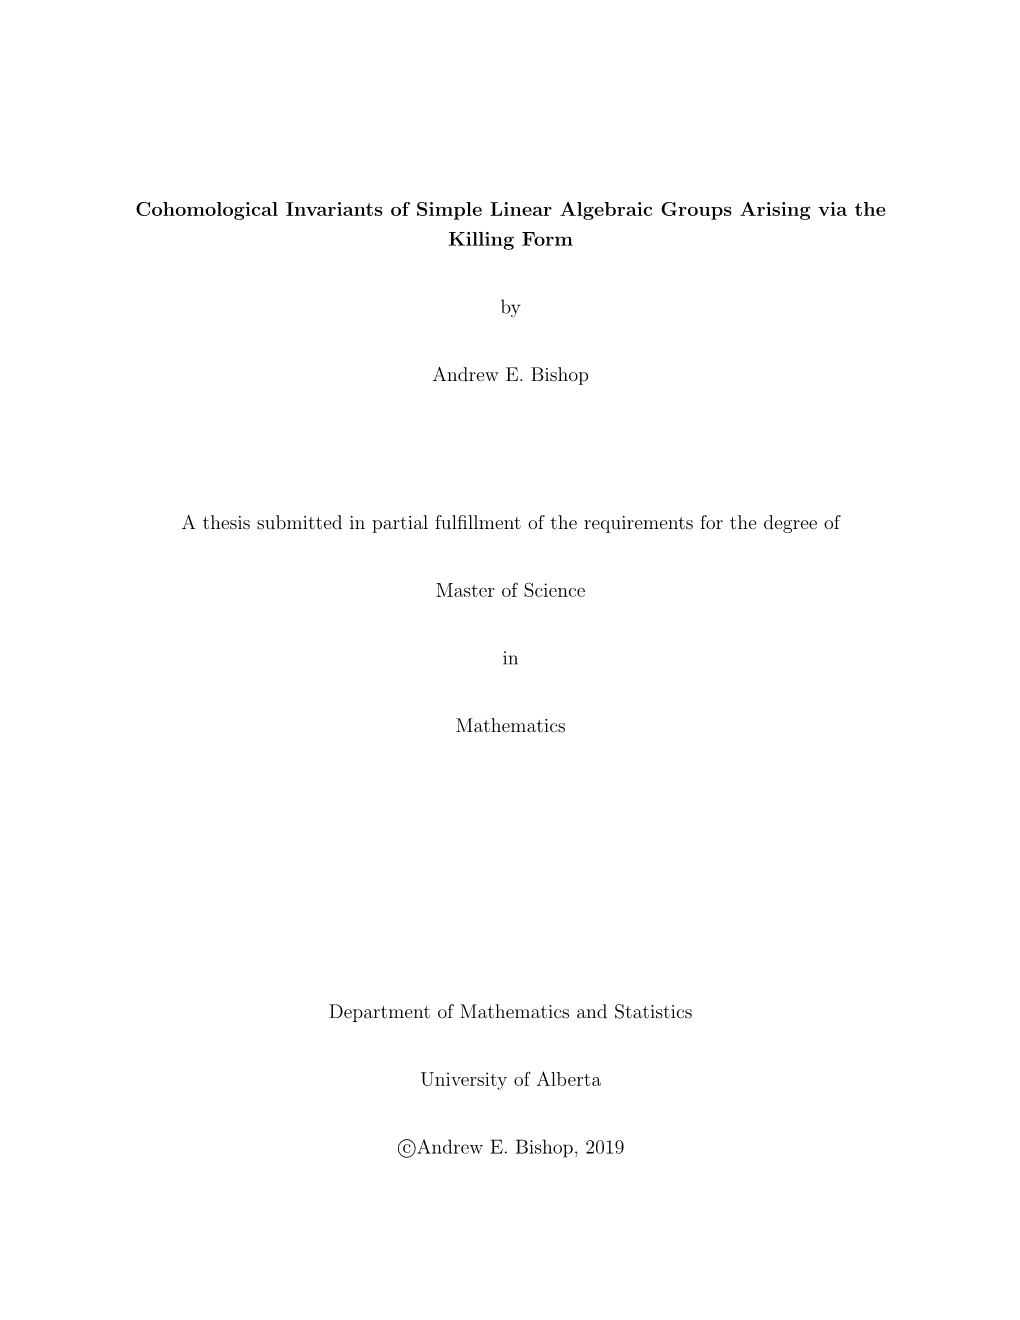 Cohomological Invariants of Simple Linear Algebraic Groups Arising Via the Killing Form